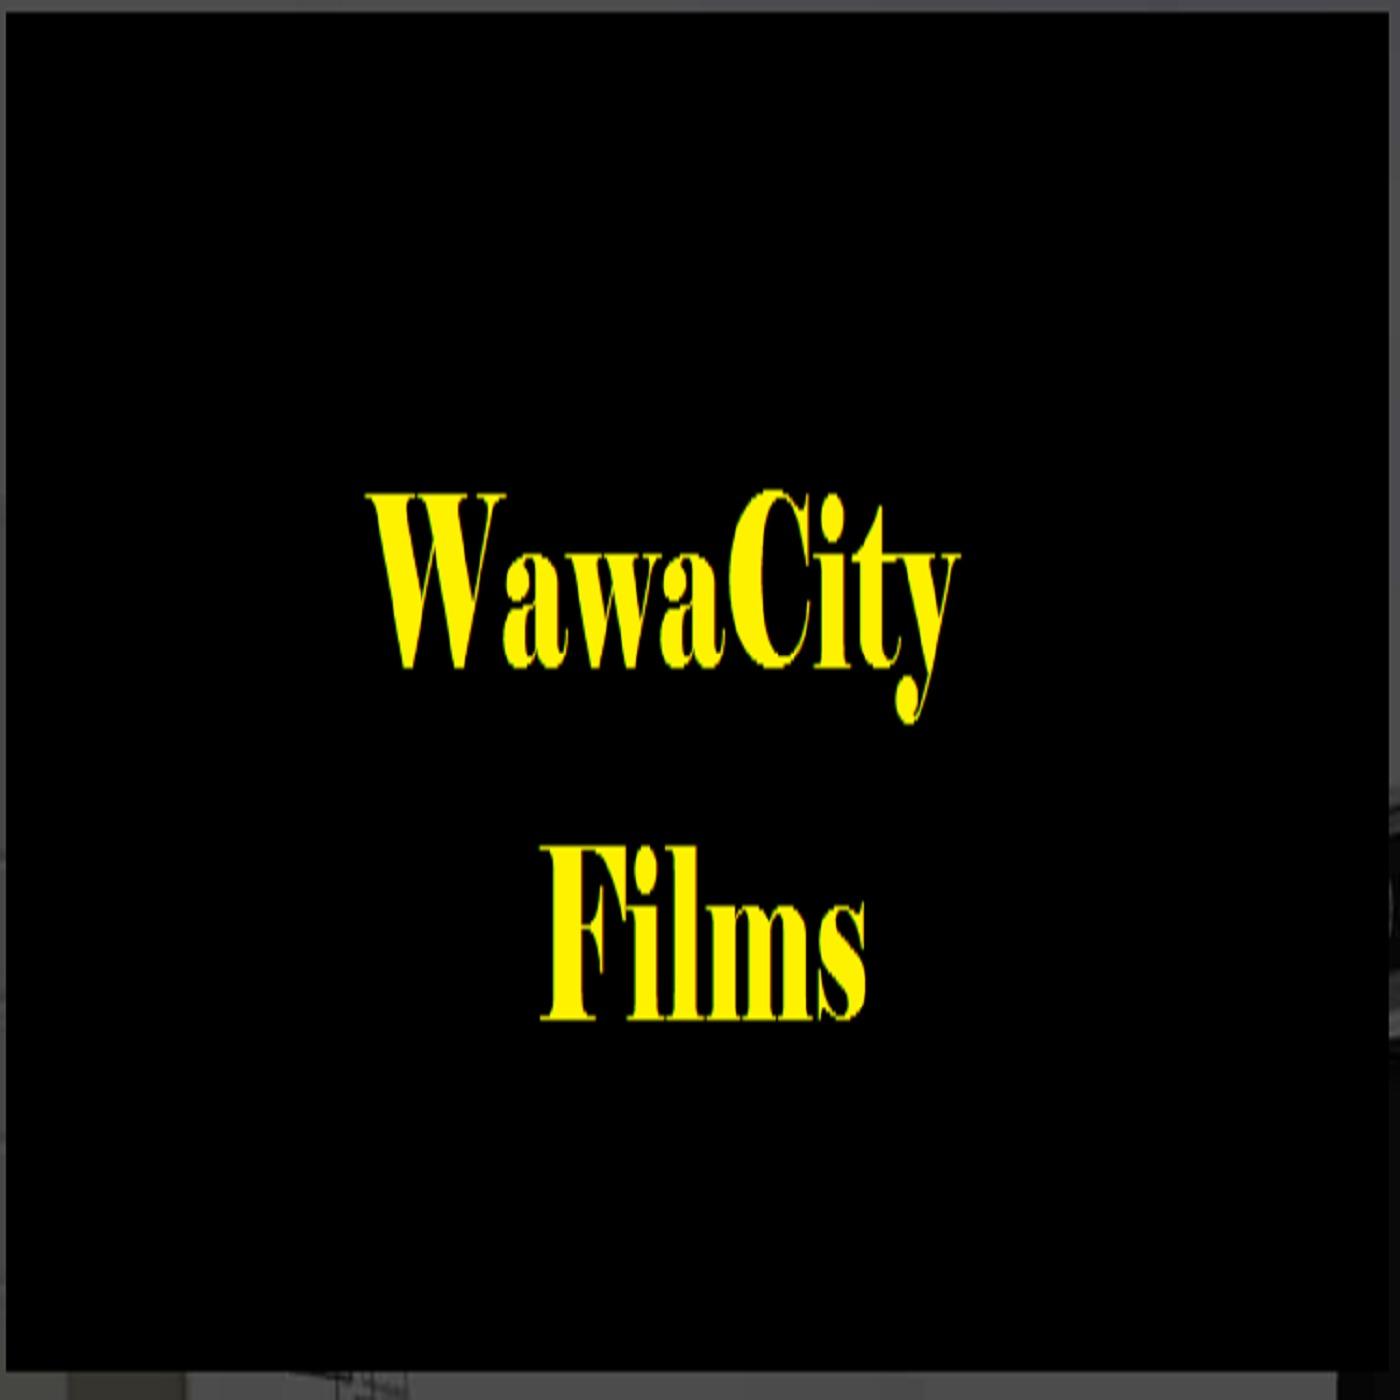 Wawacity Films